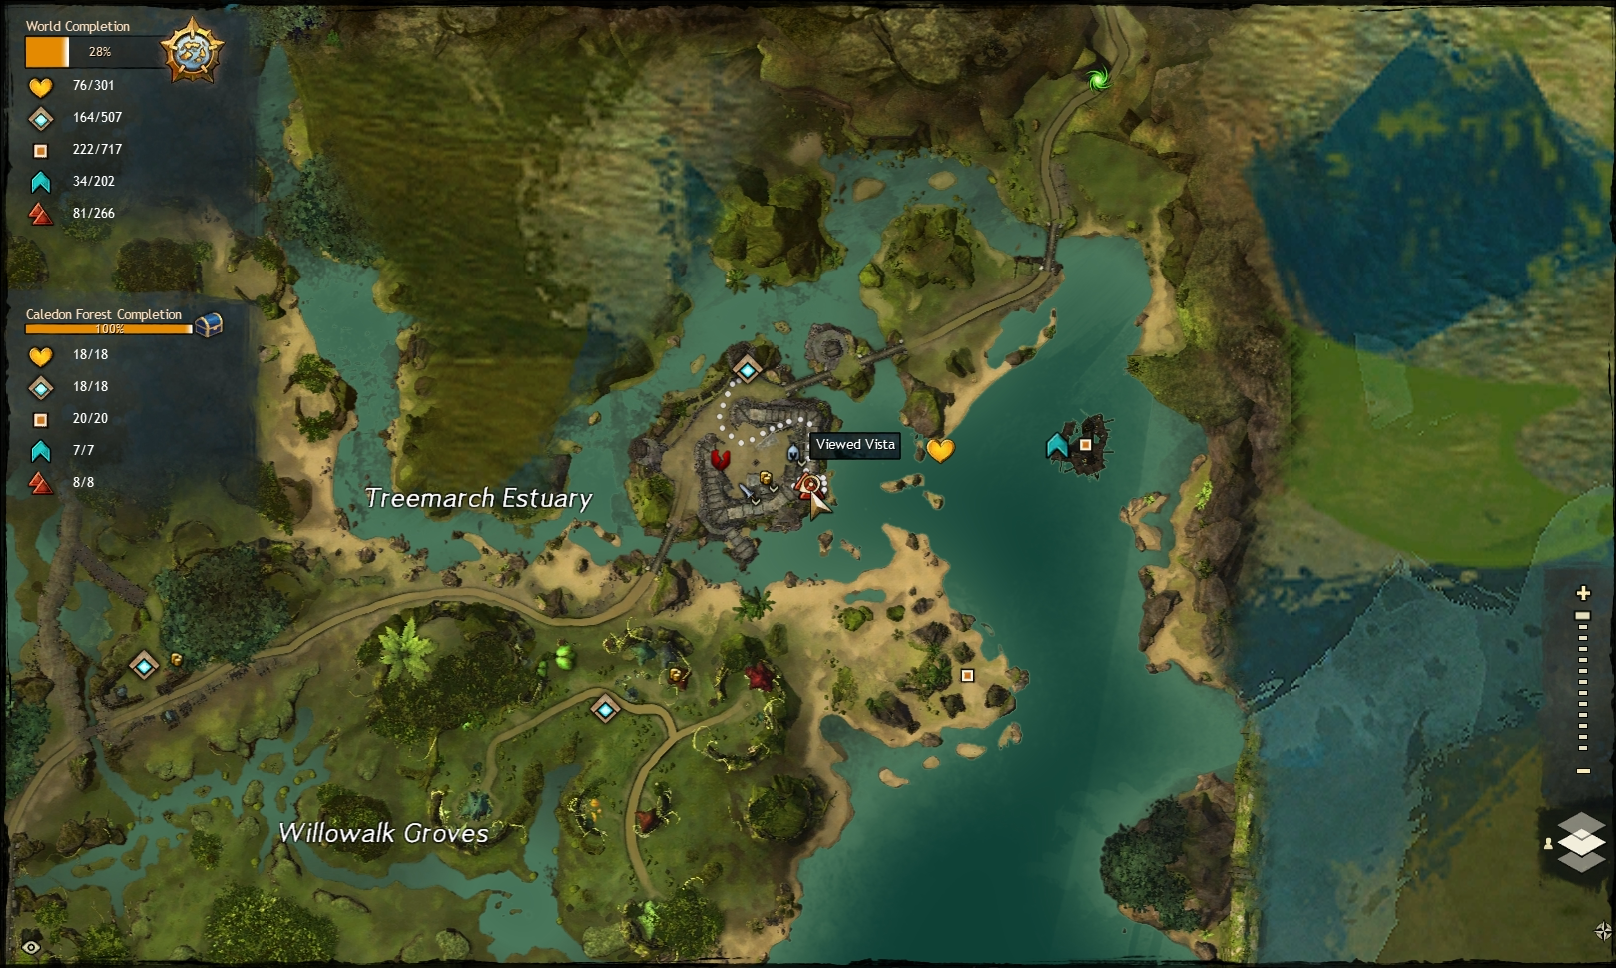 Guild Wars 2 - Vistas in Caledon Forest - 02 Queztal Bay